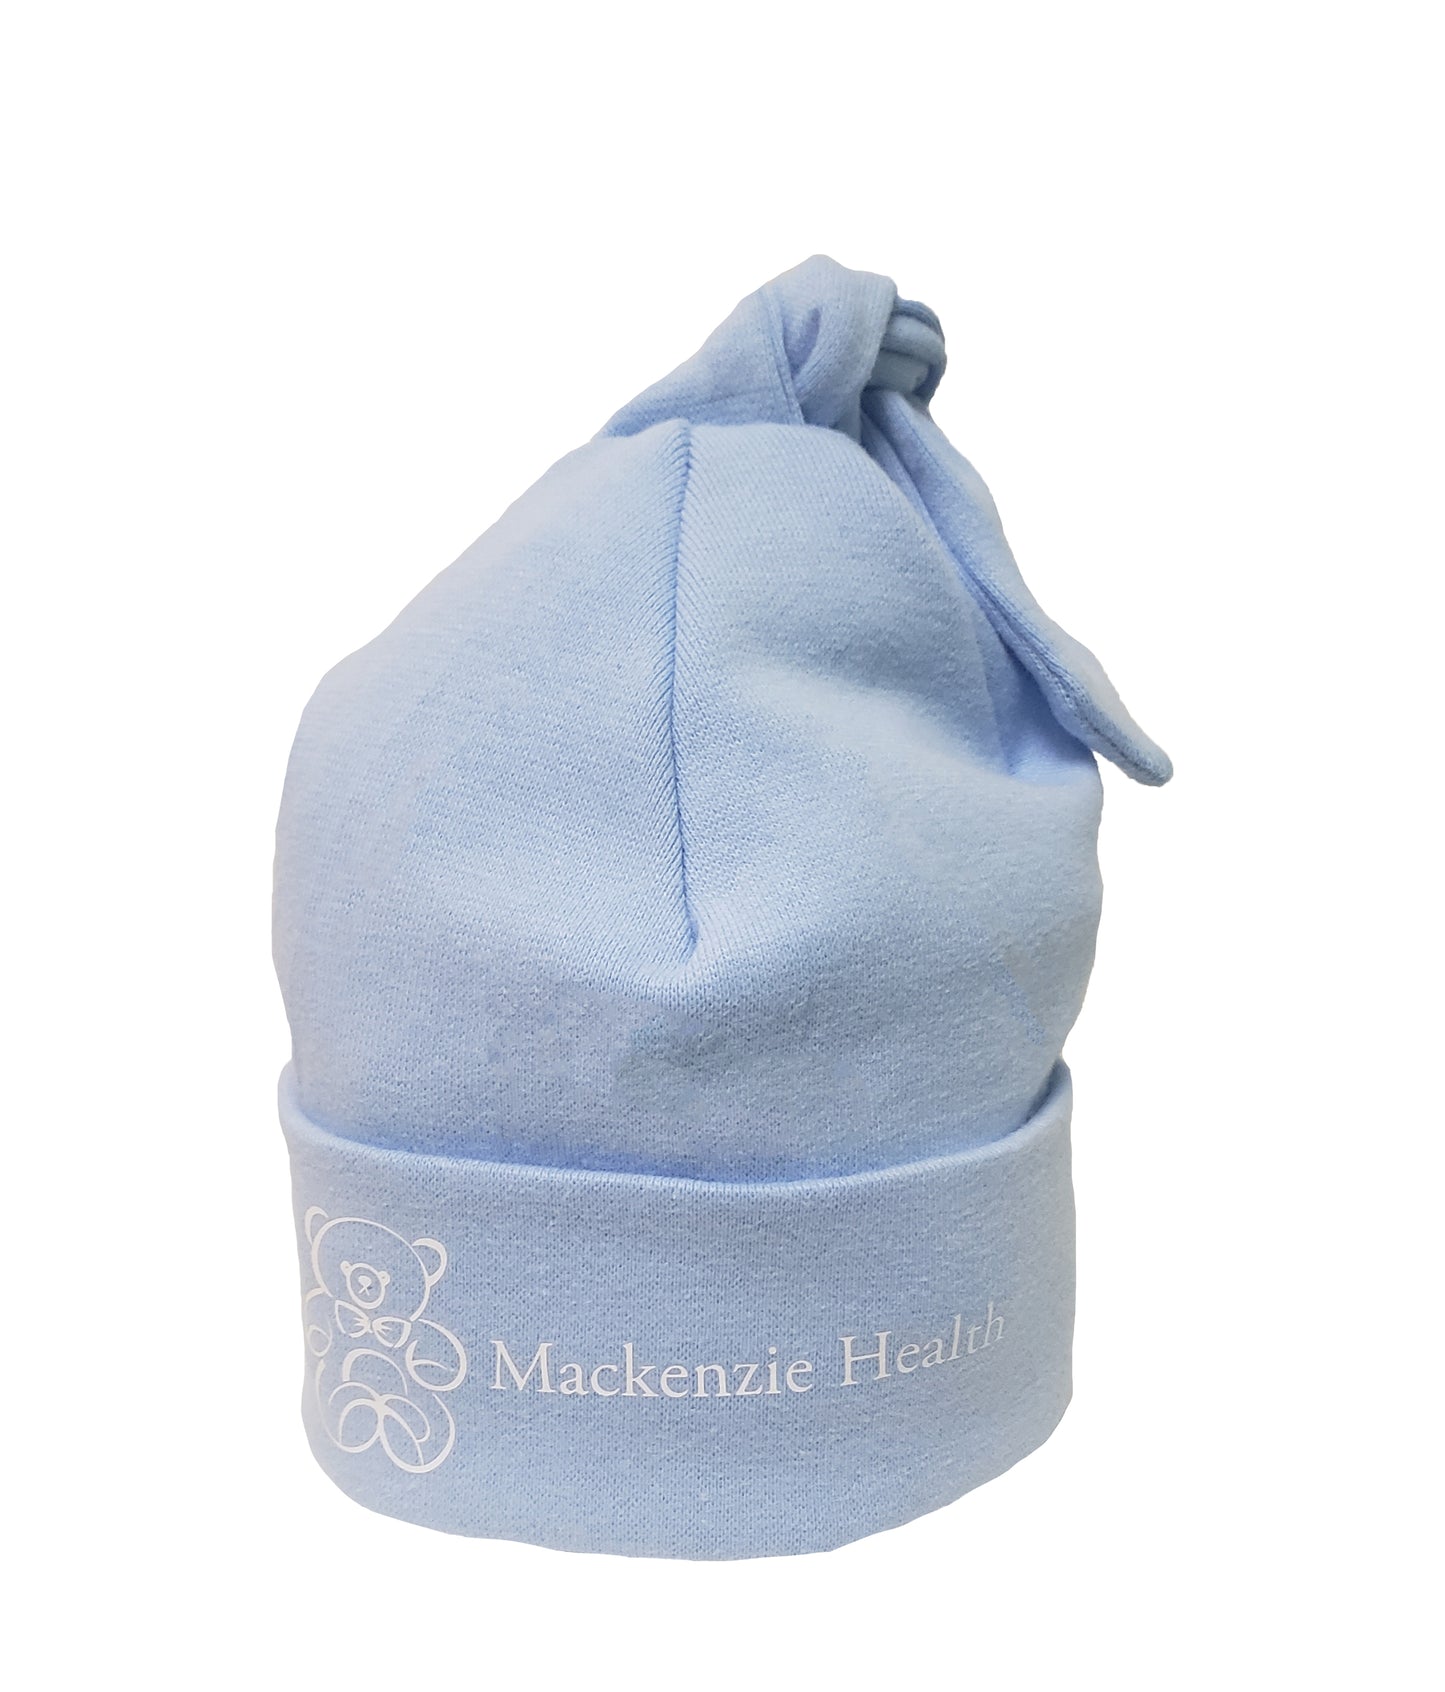 "I was born at Mackenzie Health" Hat